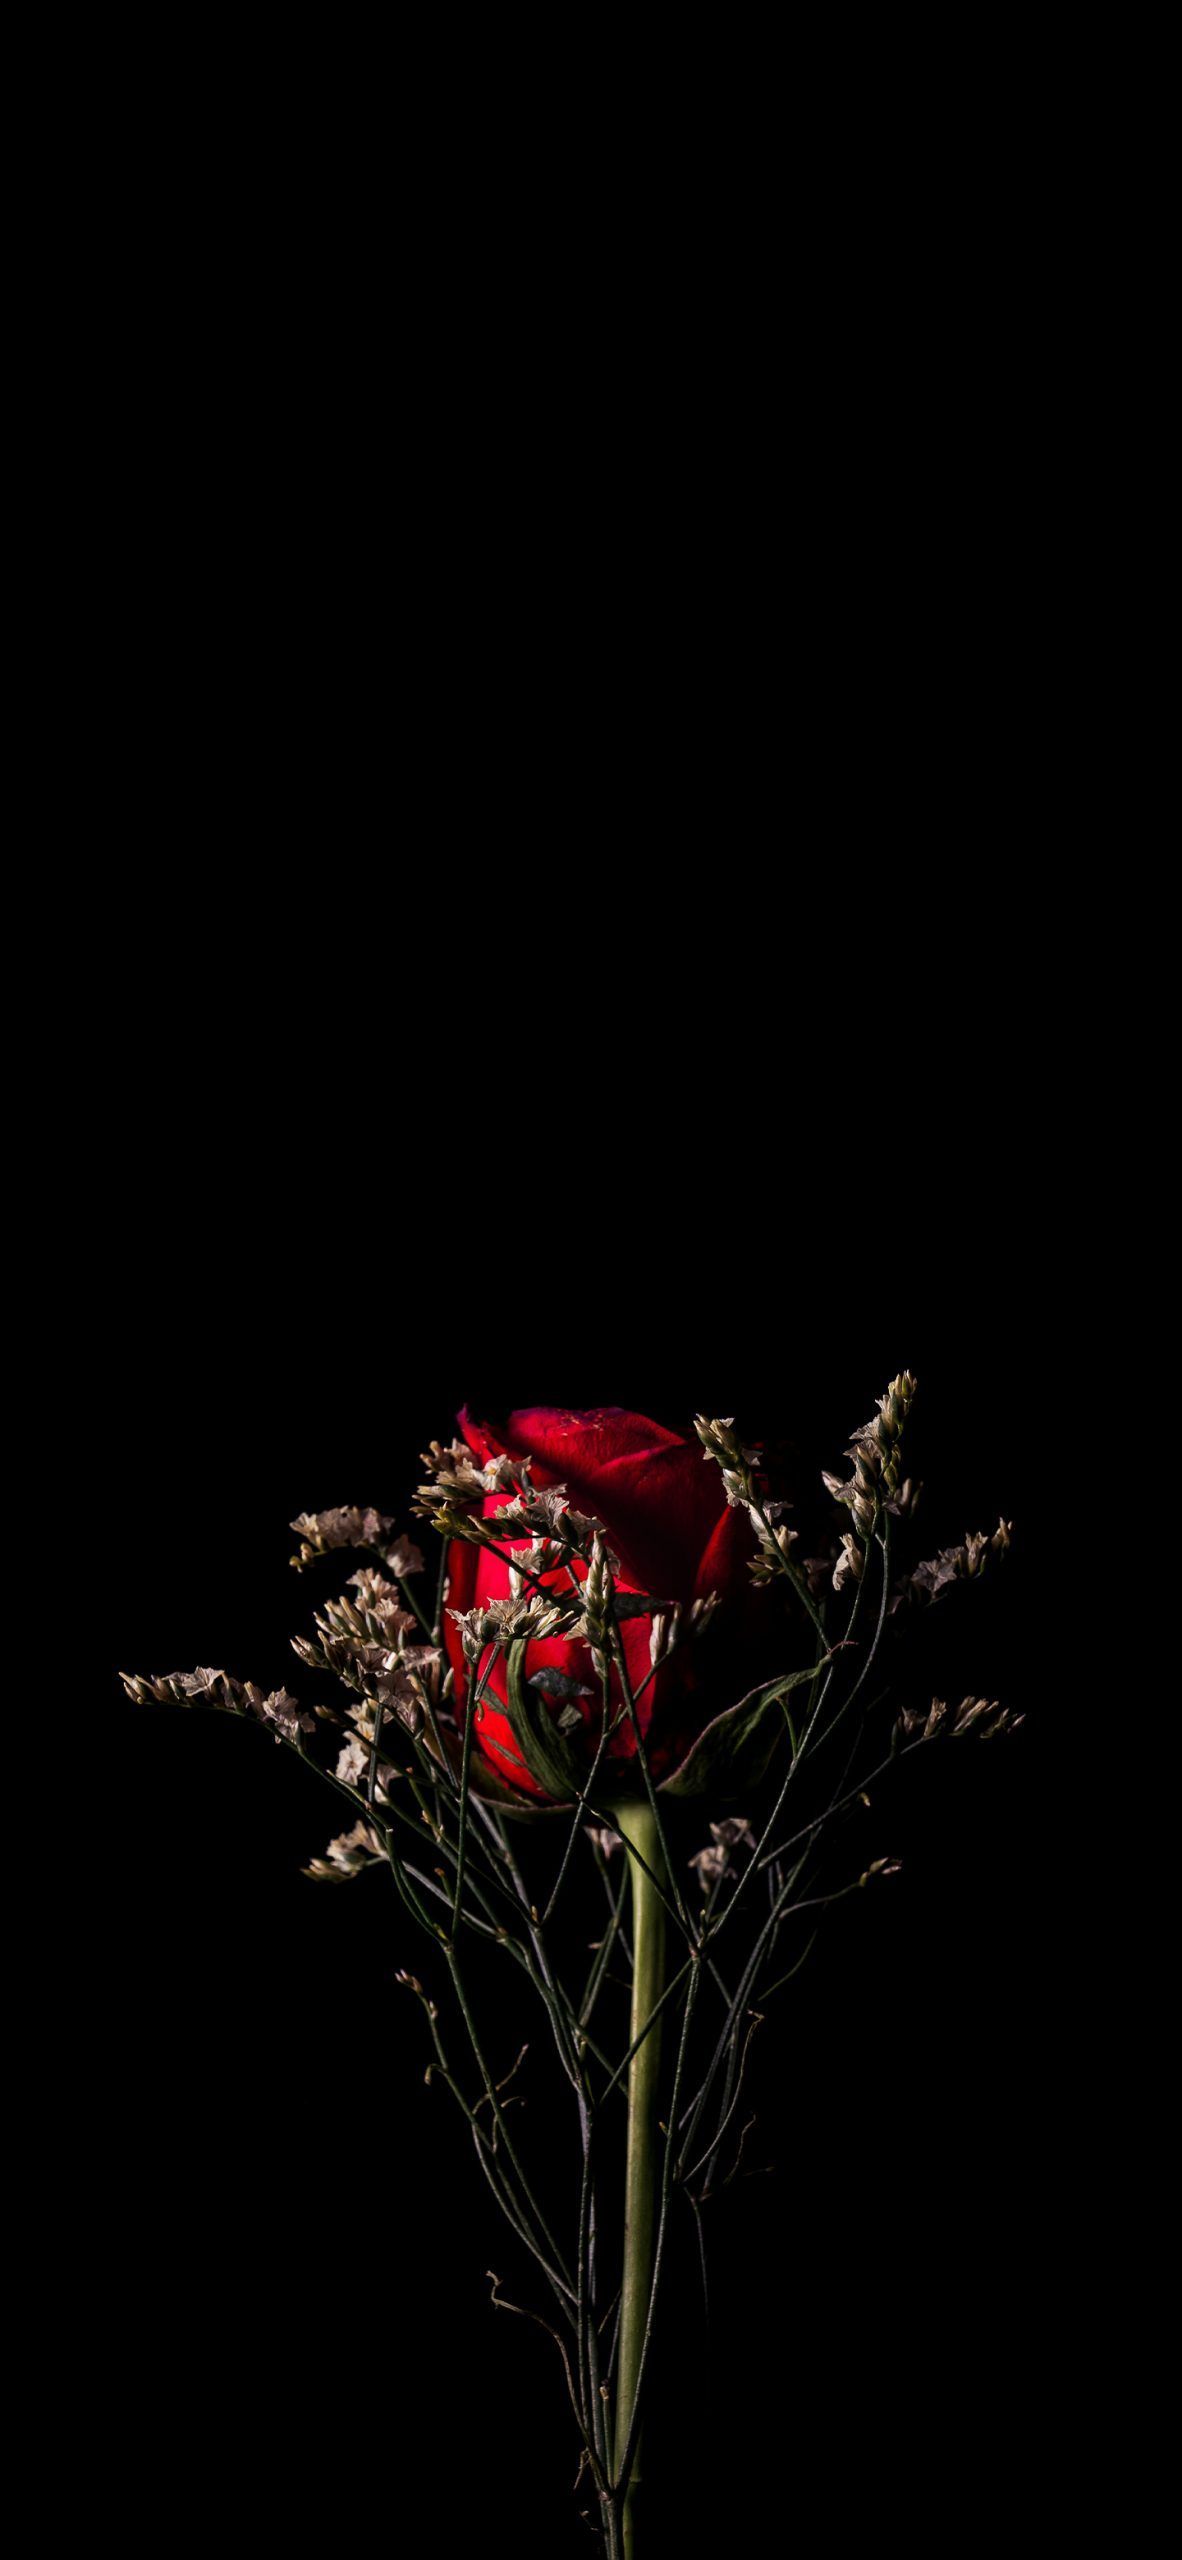 Single red rose. Red roses wallpaper .com